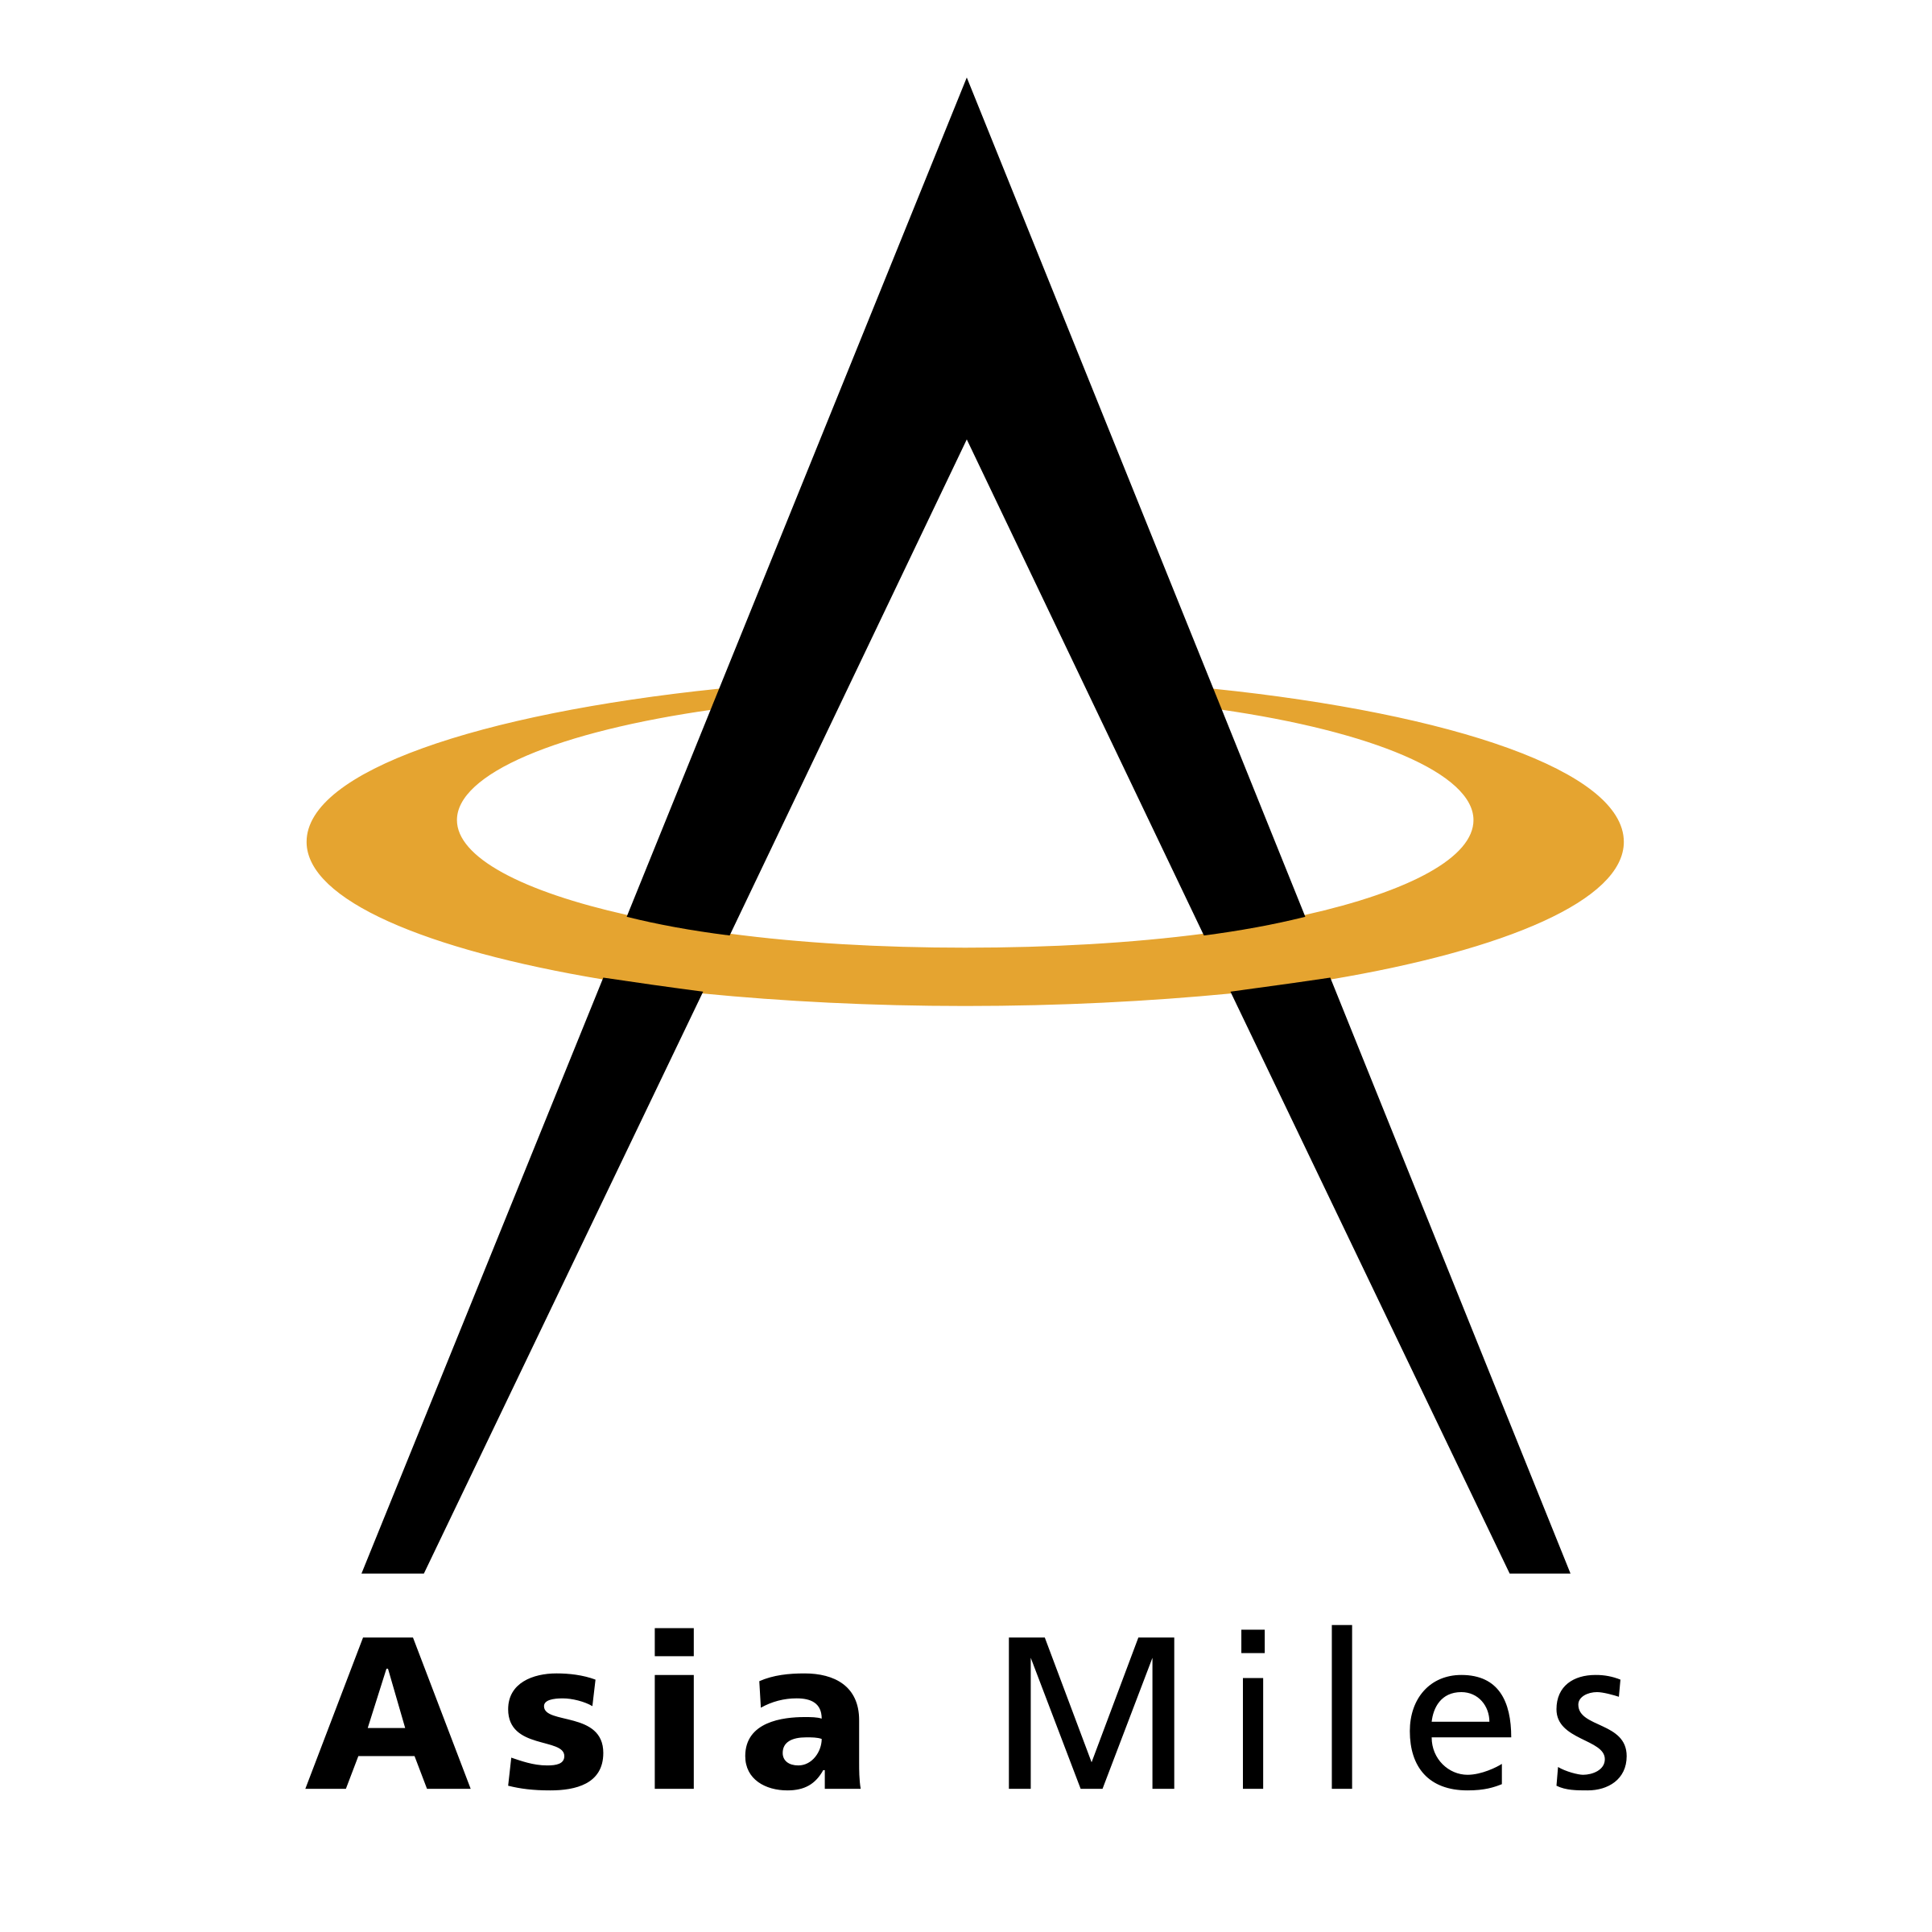 Miles Logo - Asia Miles Logo PNG Transparent & SVG Vector